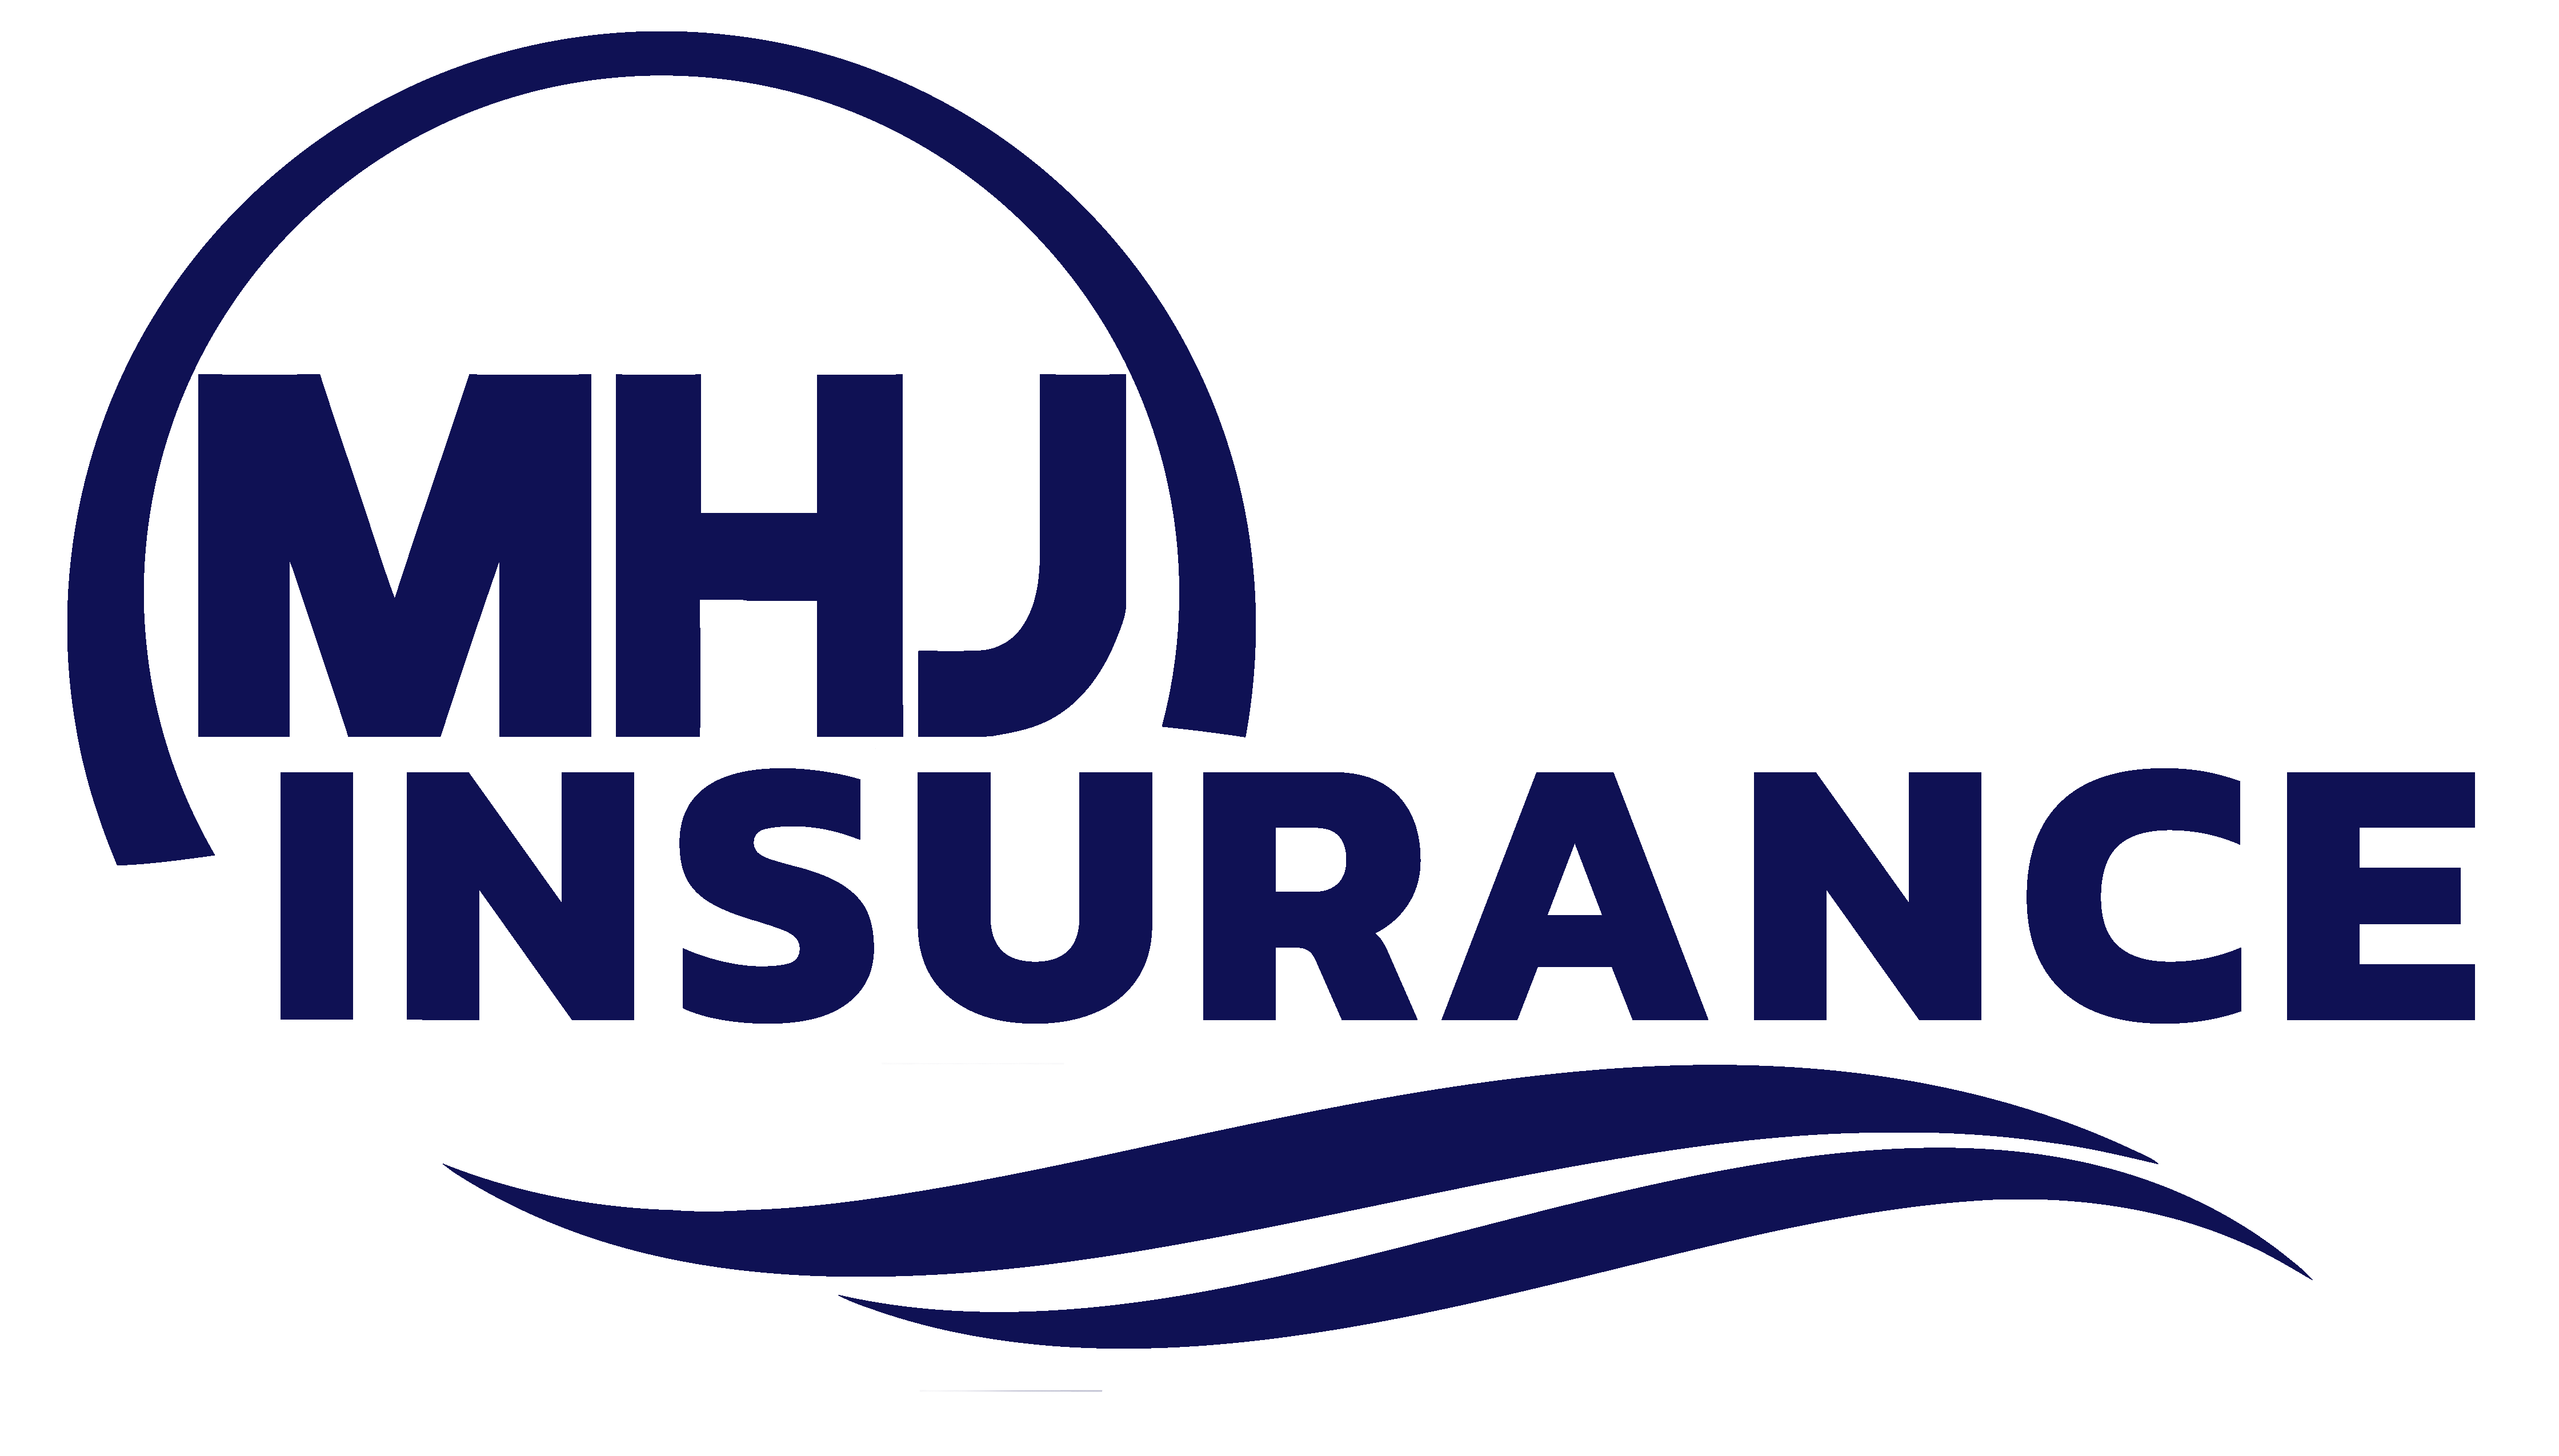 MHJ & Heartland Insurance Group